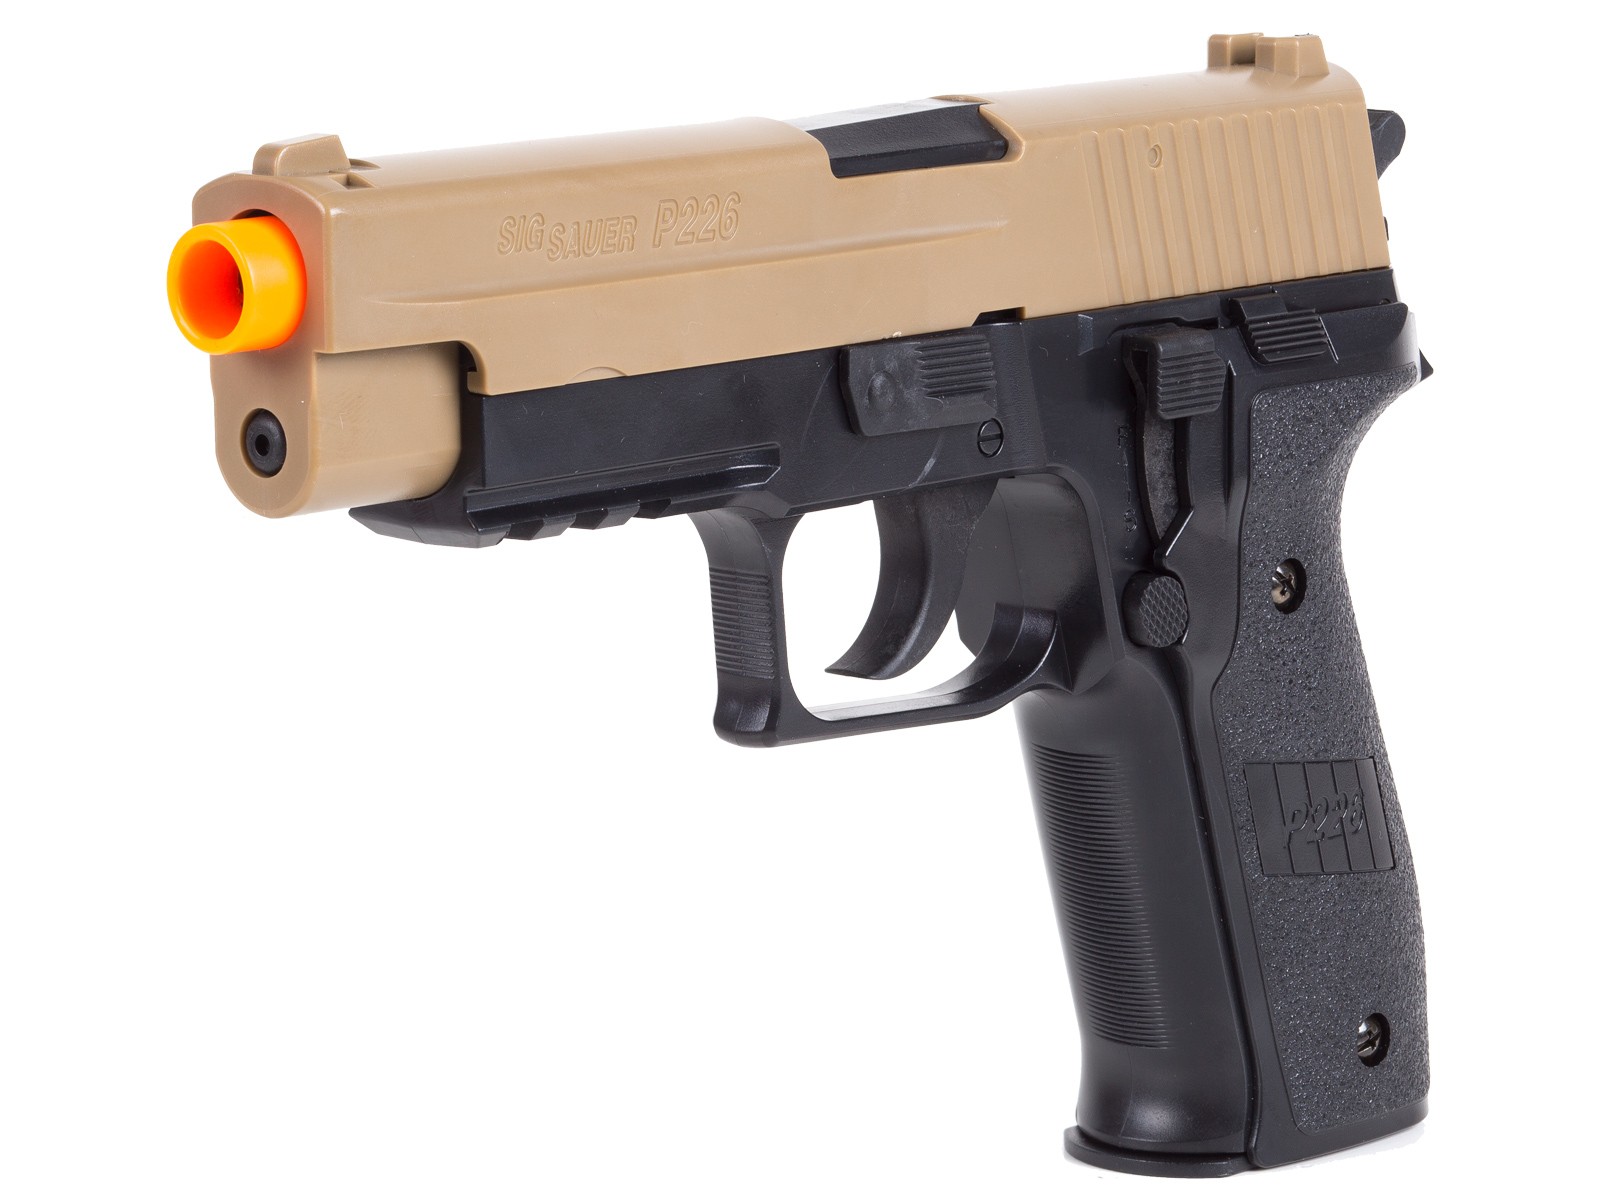 SIG Sauer P226 Airsoft Pistol, Black/Tan